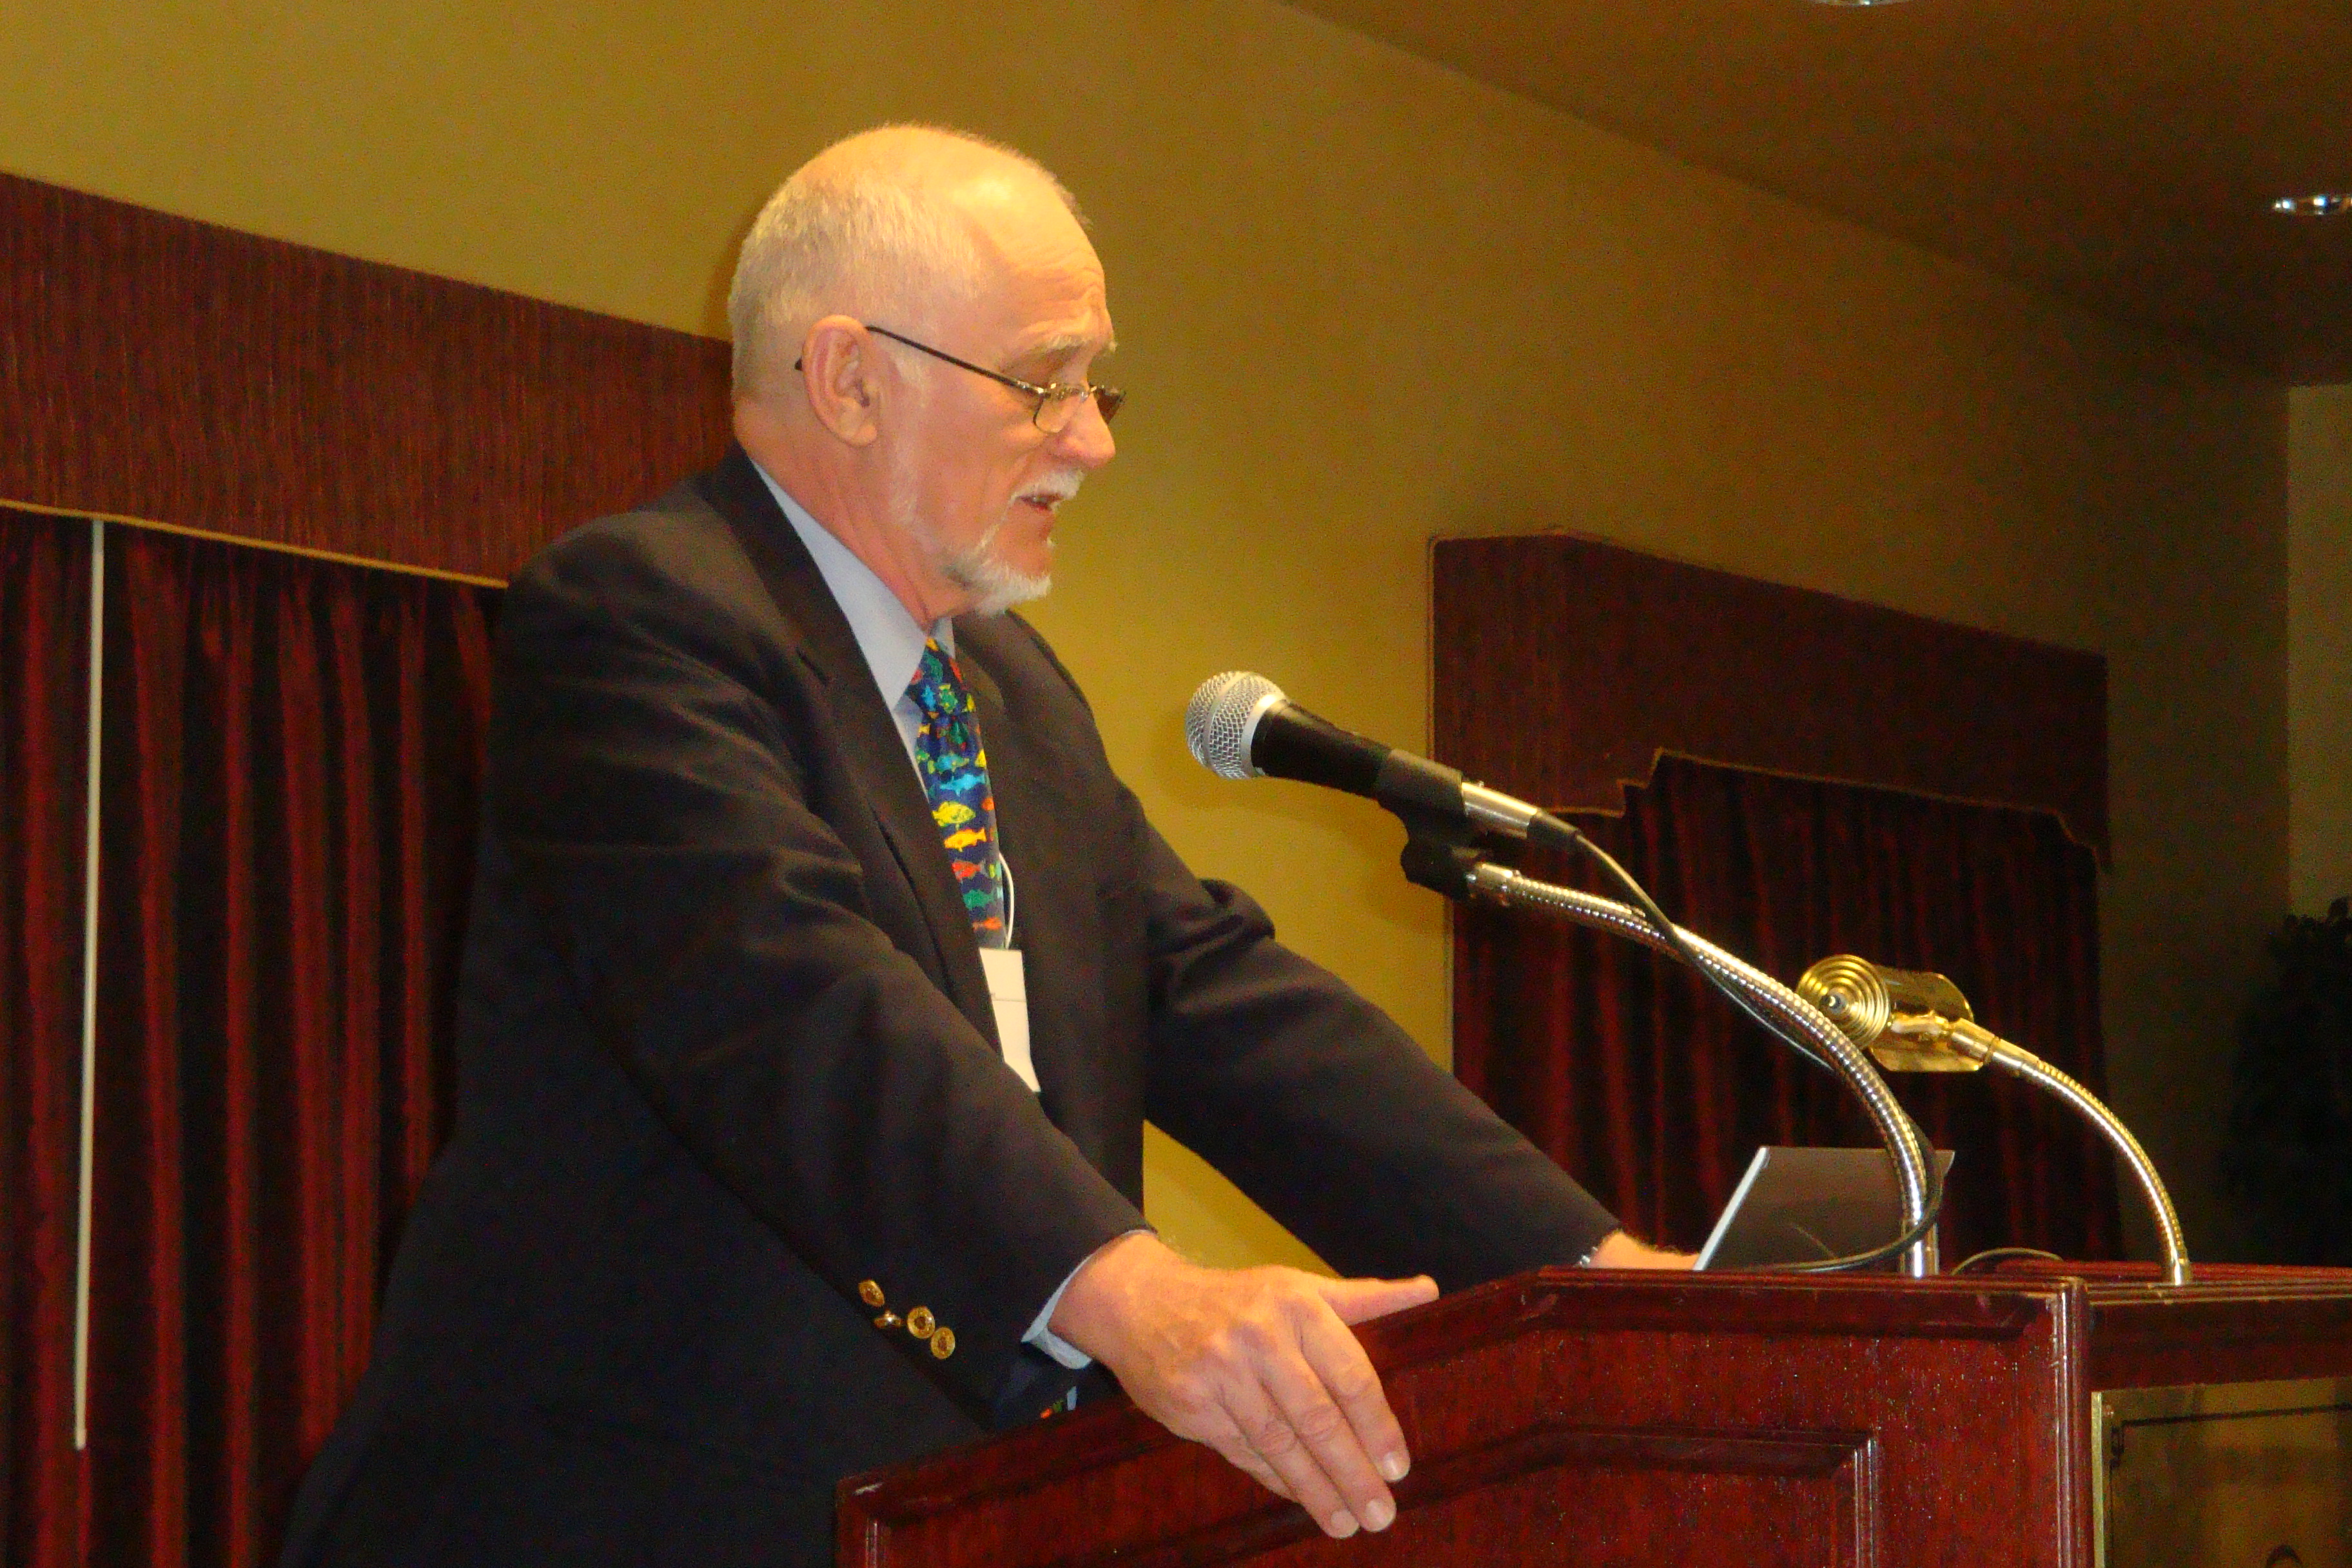 Bob Stimson delivers his Presidential Address